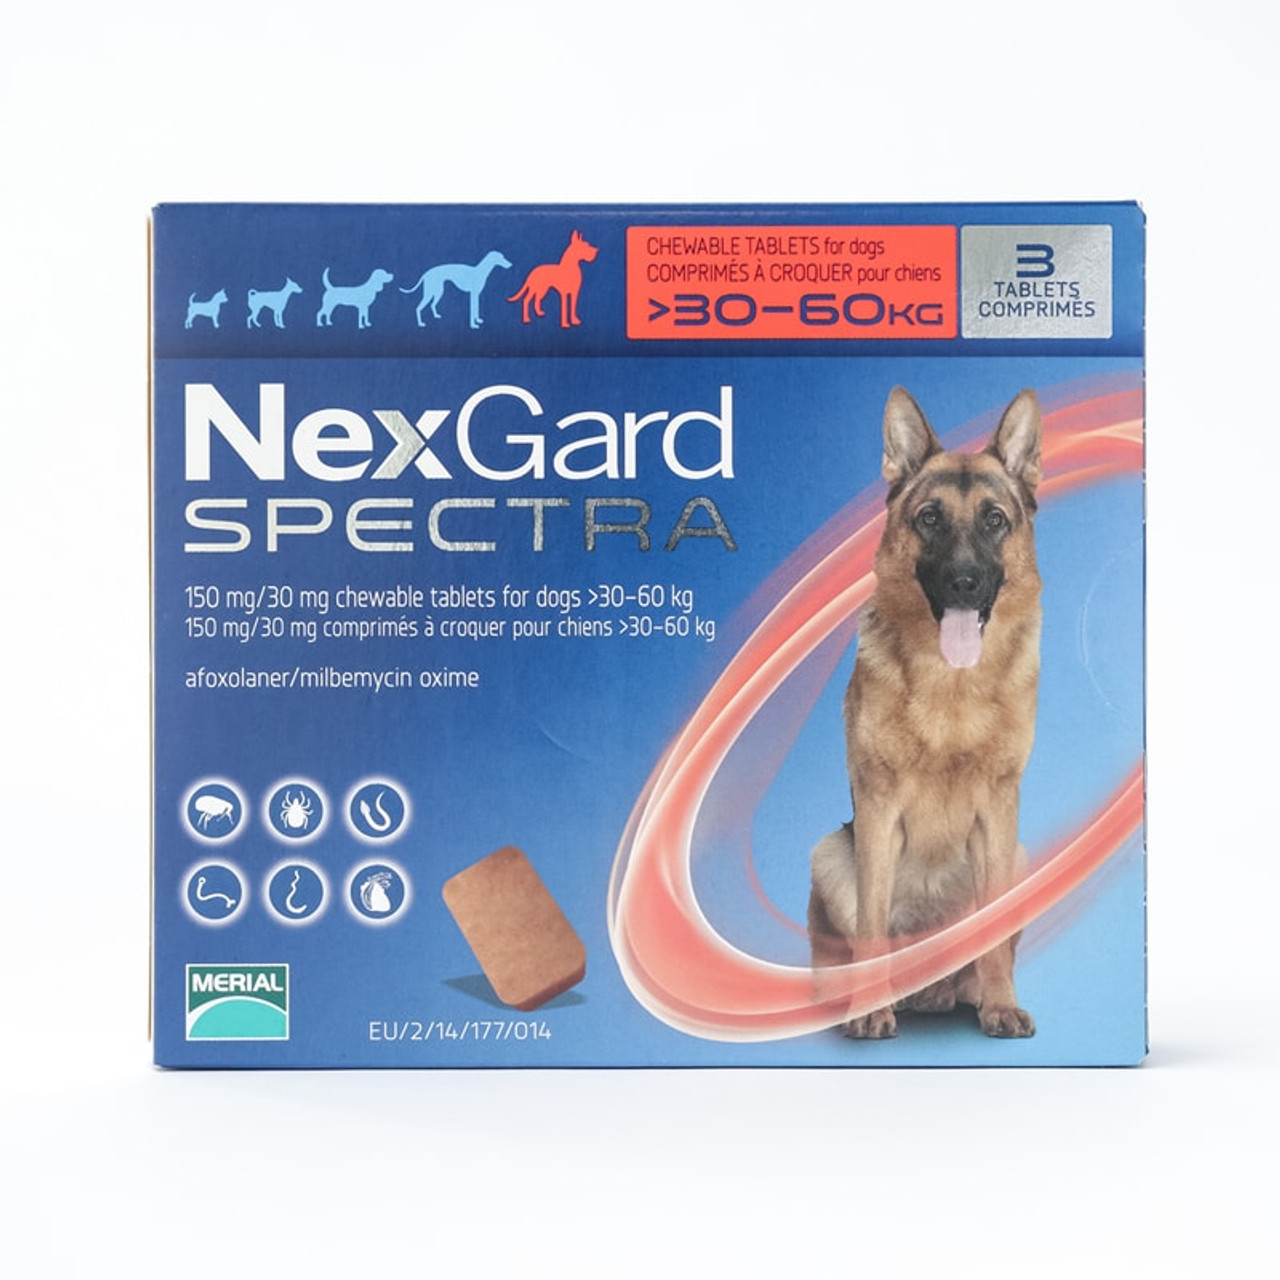 Нексгард для собак 2 4 кг. НЕКСГАРД спектра 30-60. НЕКСГАРД спектра для собак 30-60 кг. NEXGARD Spectra для колли. НЕКСГАРД 6 кг.